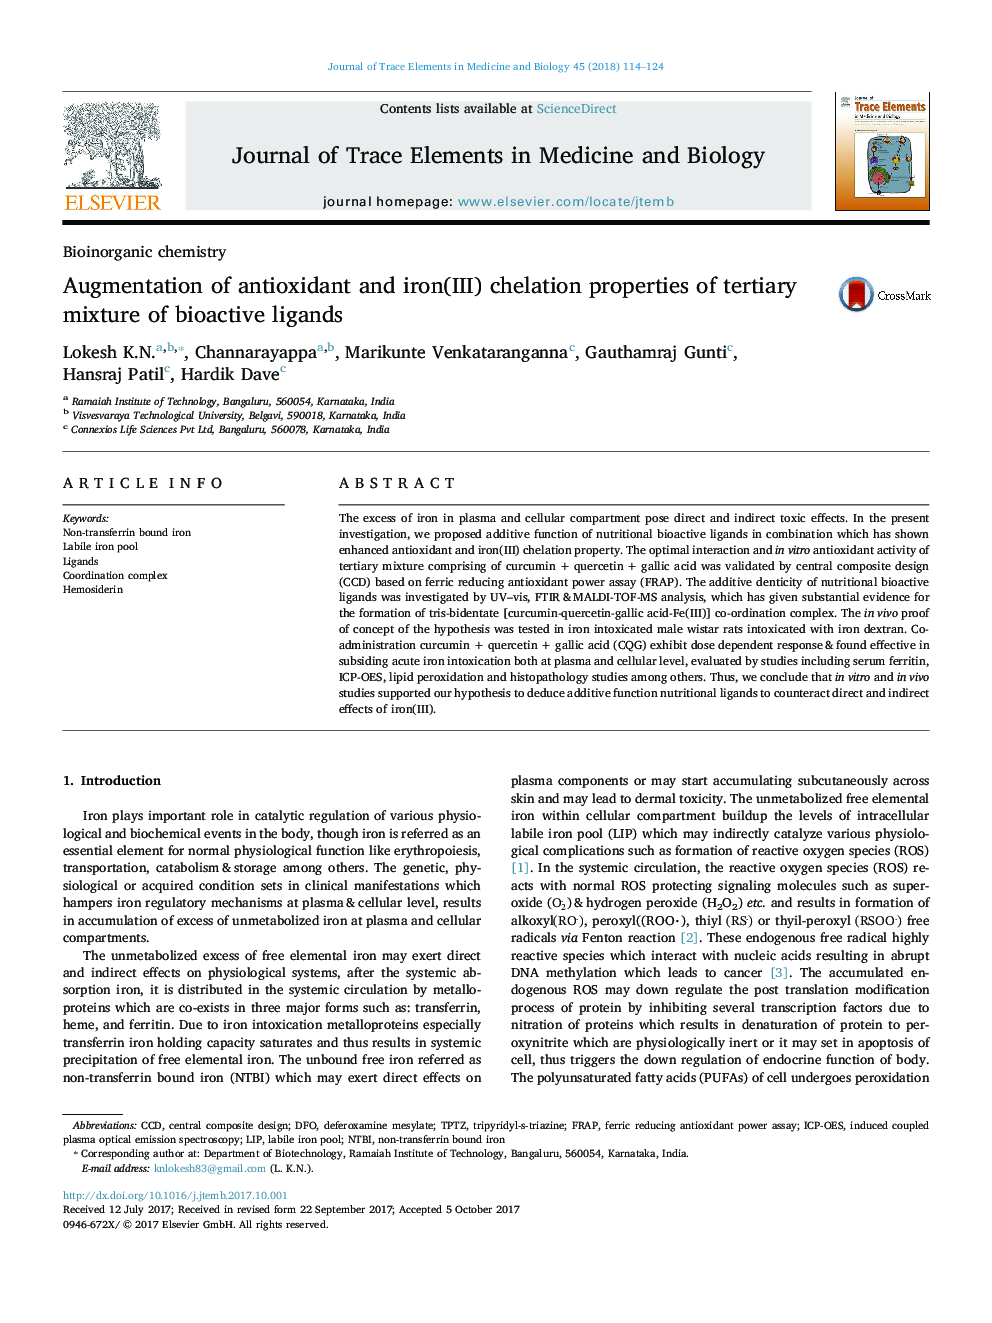 Augmentation of antioxidant and iron(III) chelation properties of tertiary mixture of bioactive ligands